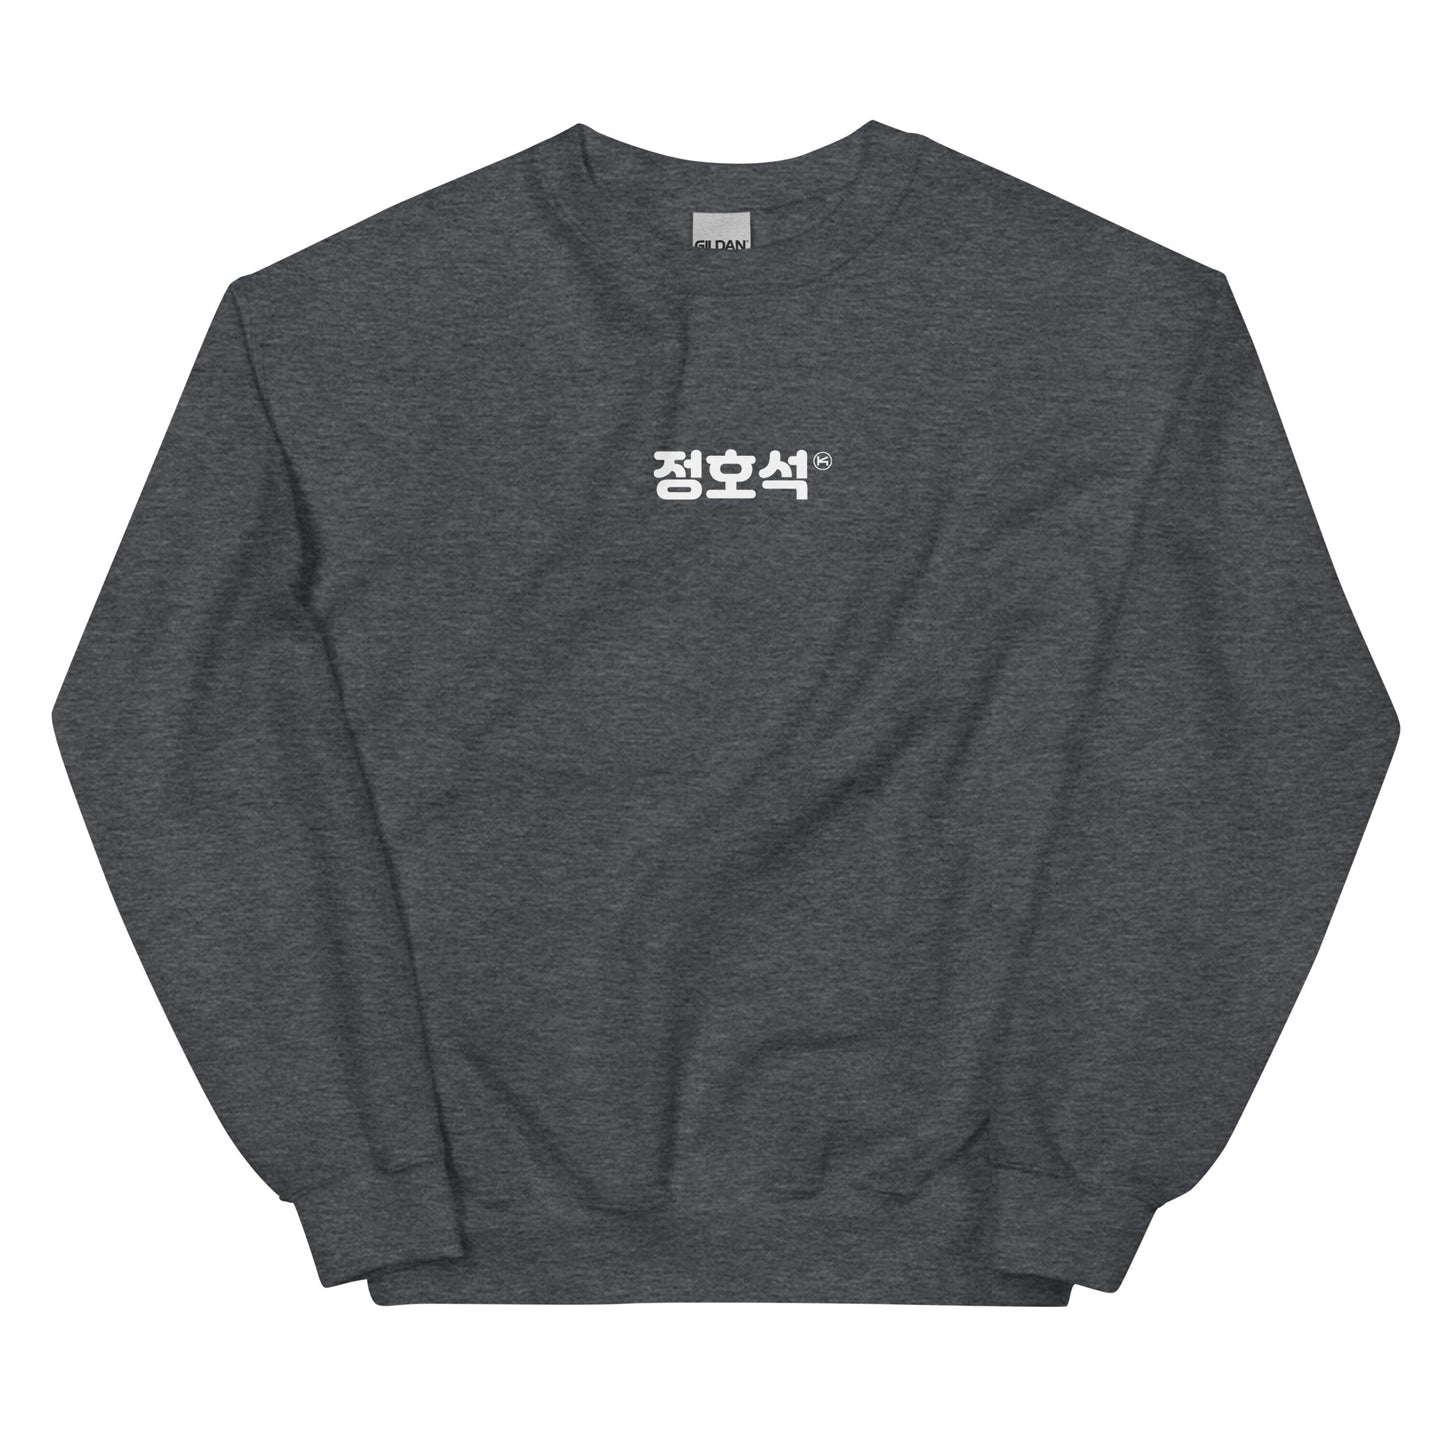 J-hope, Jung Ho-seok in Korean Hangul Kpop BTS Merch Unisex Sweatshirt